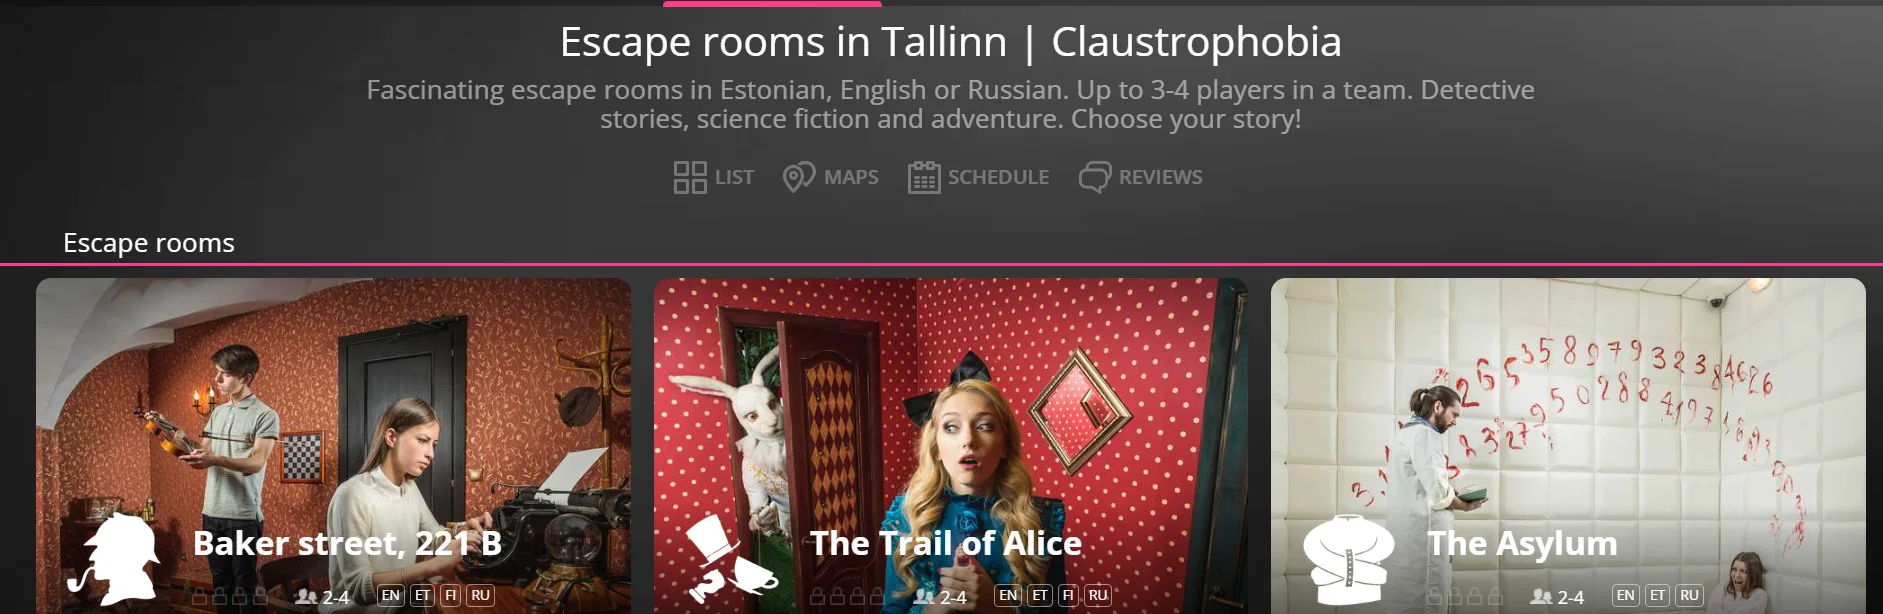 Claustrophobia escape rooms home page